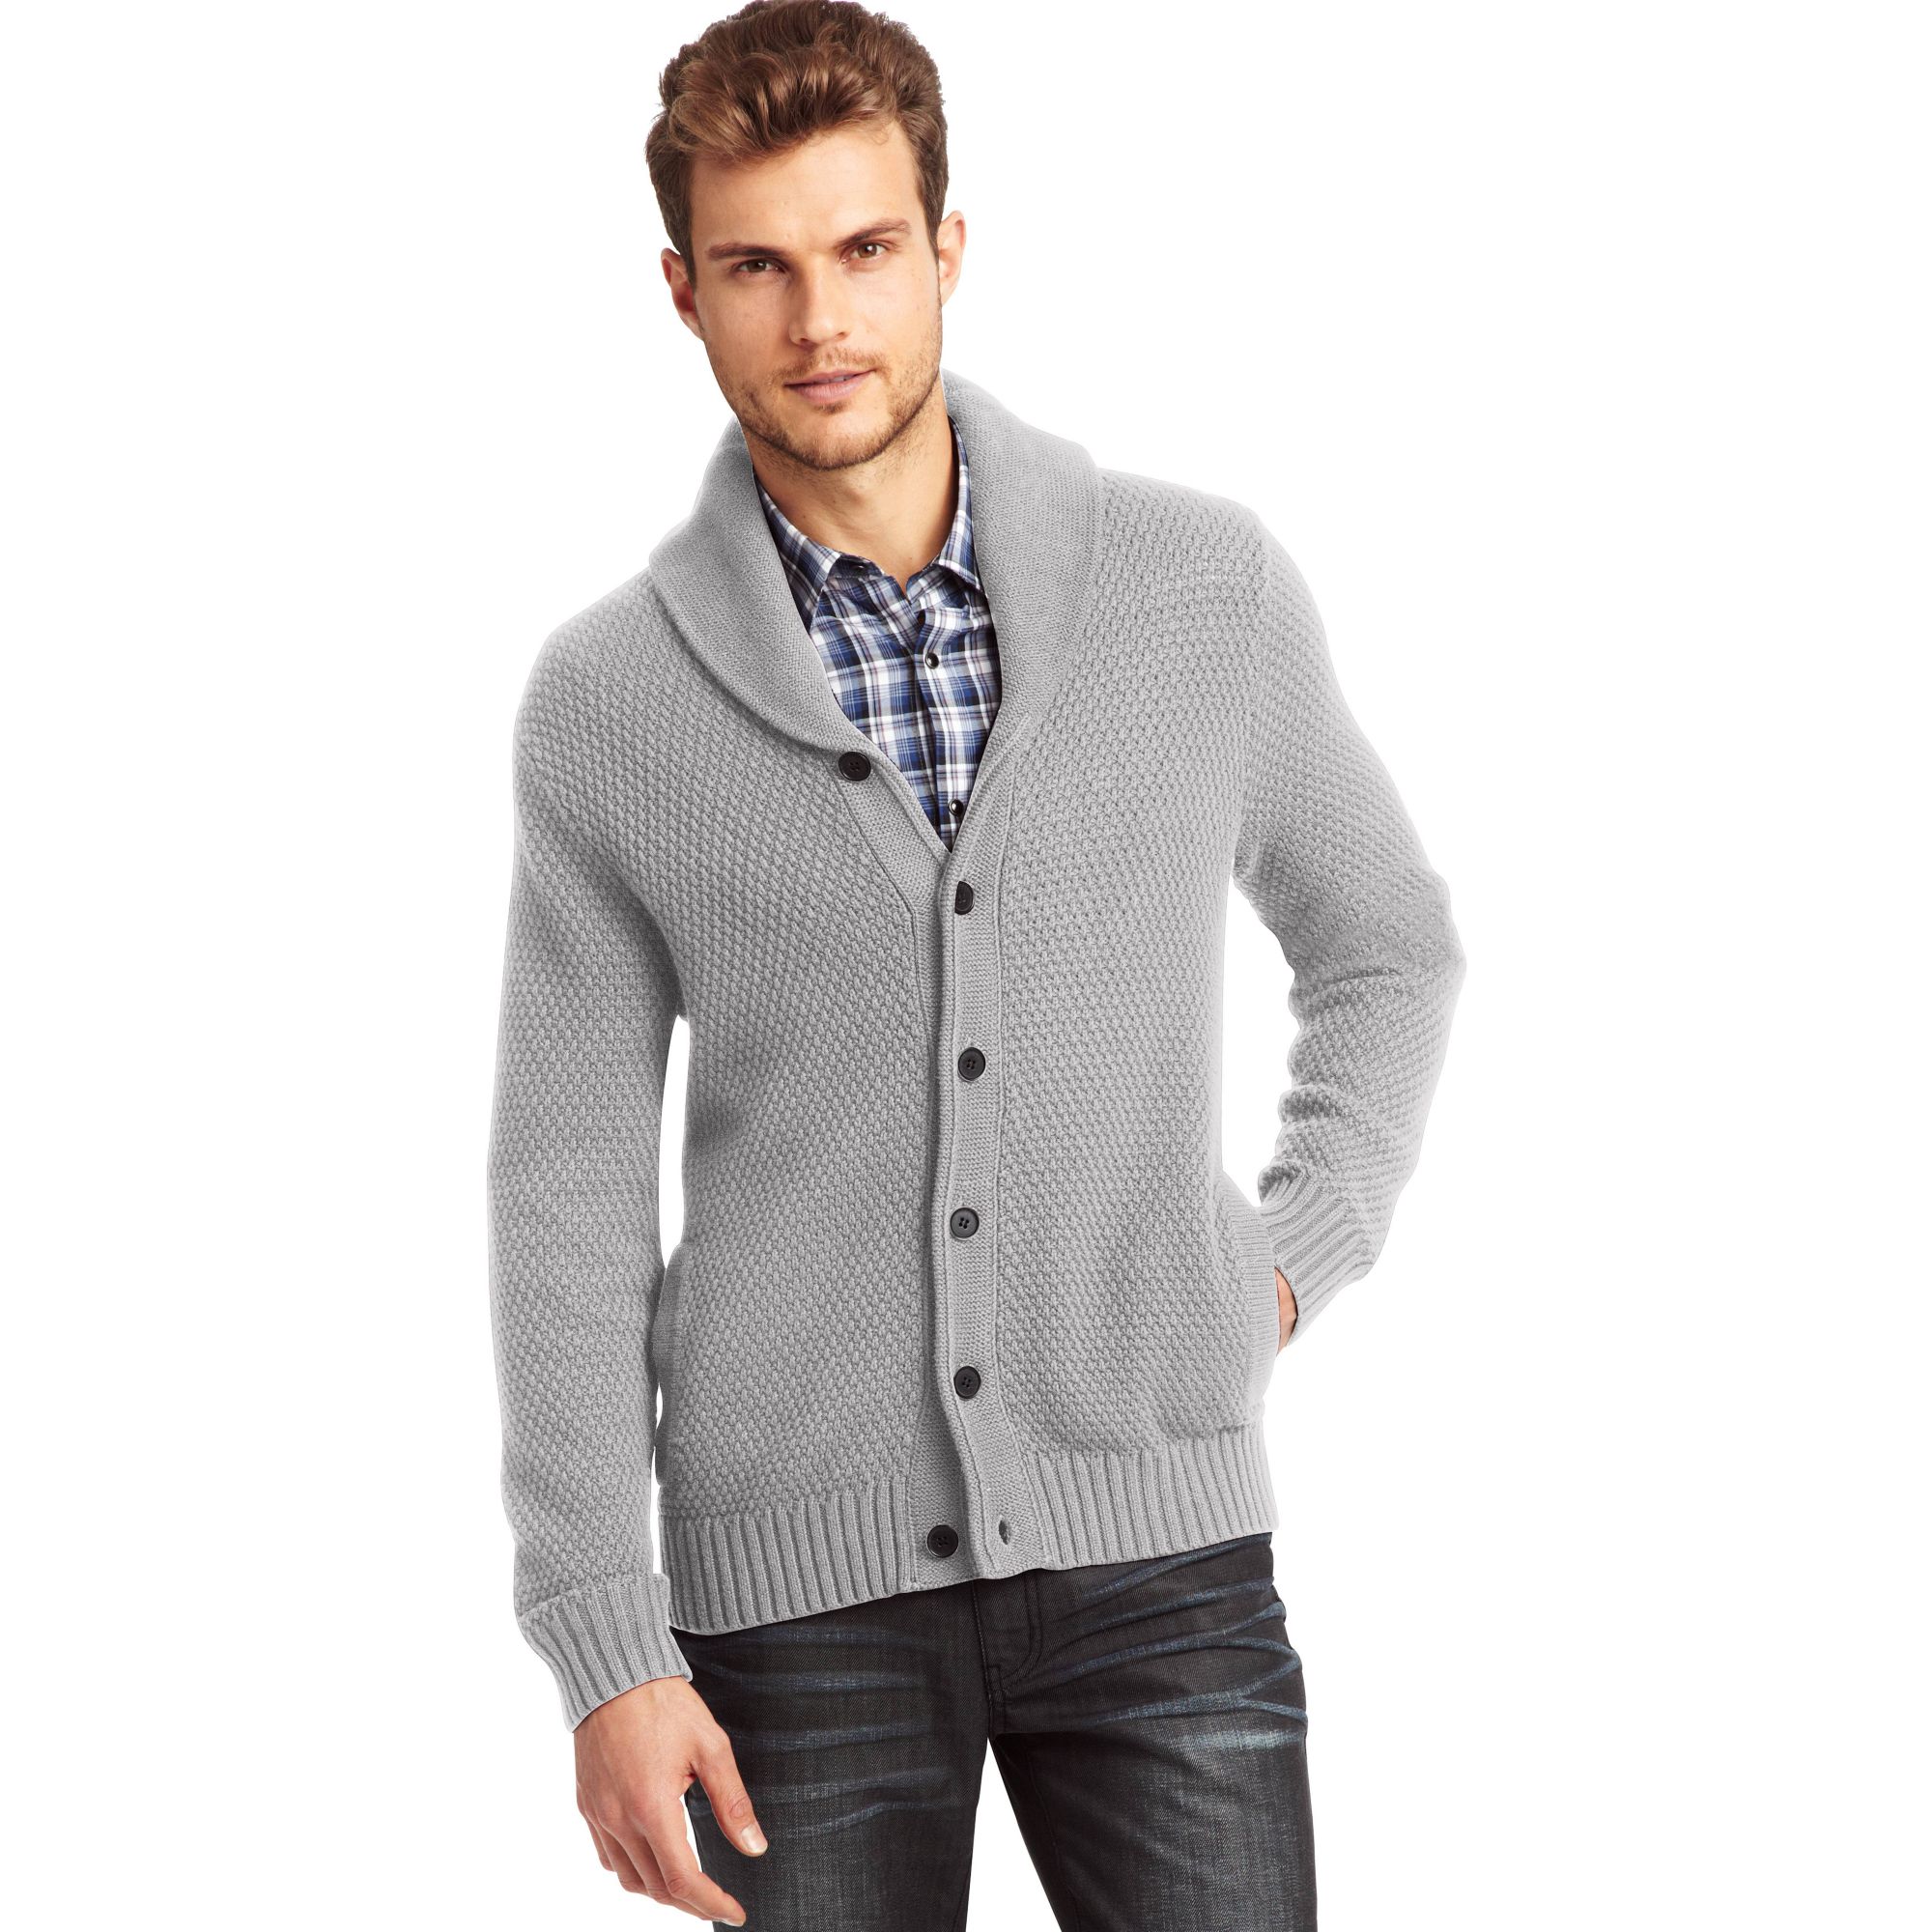 Lyst - Kenneth Cole Long Sleeve Shawl Collar Cardigan Sweater in Gray ...